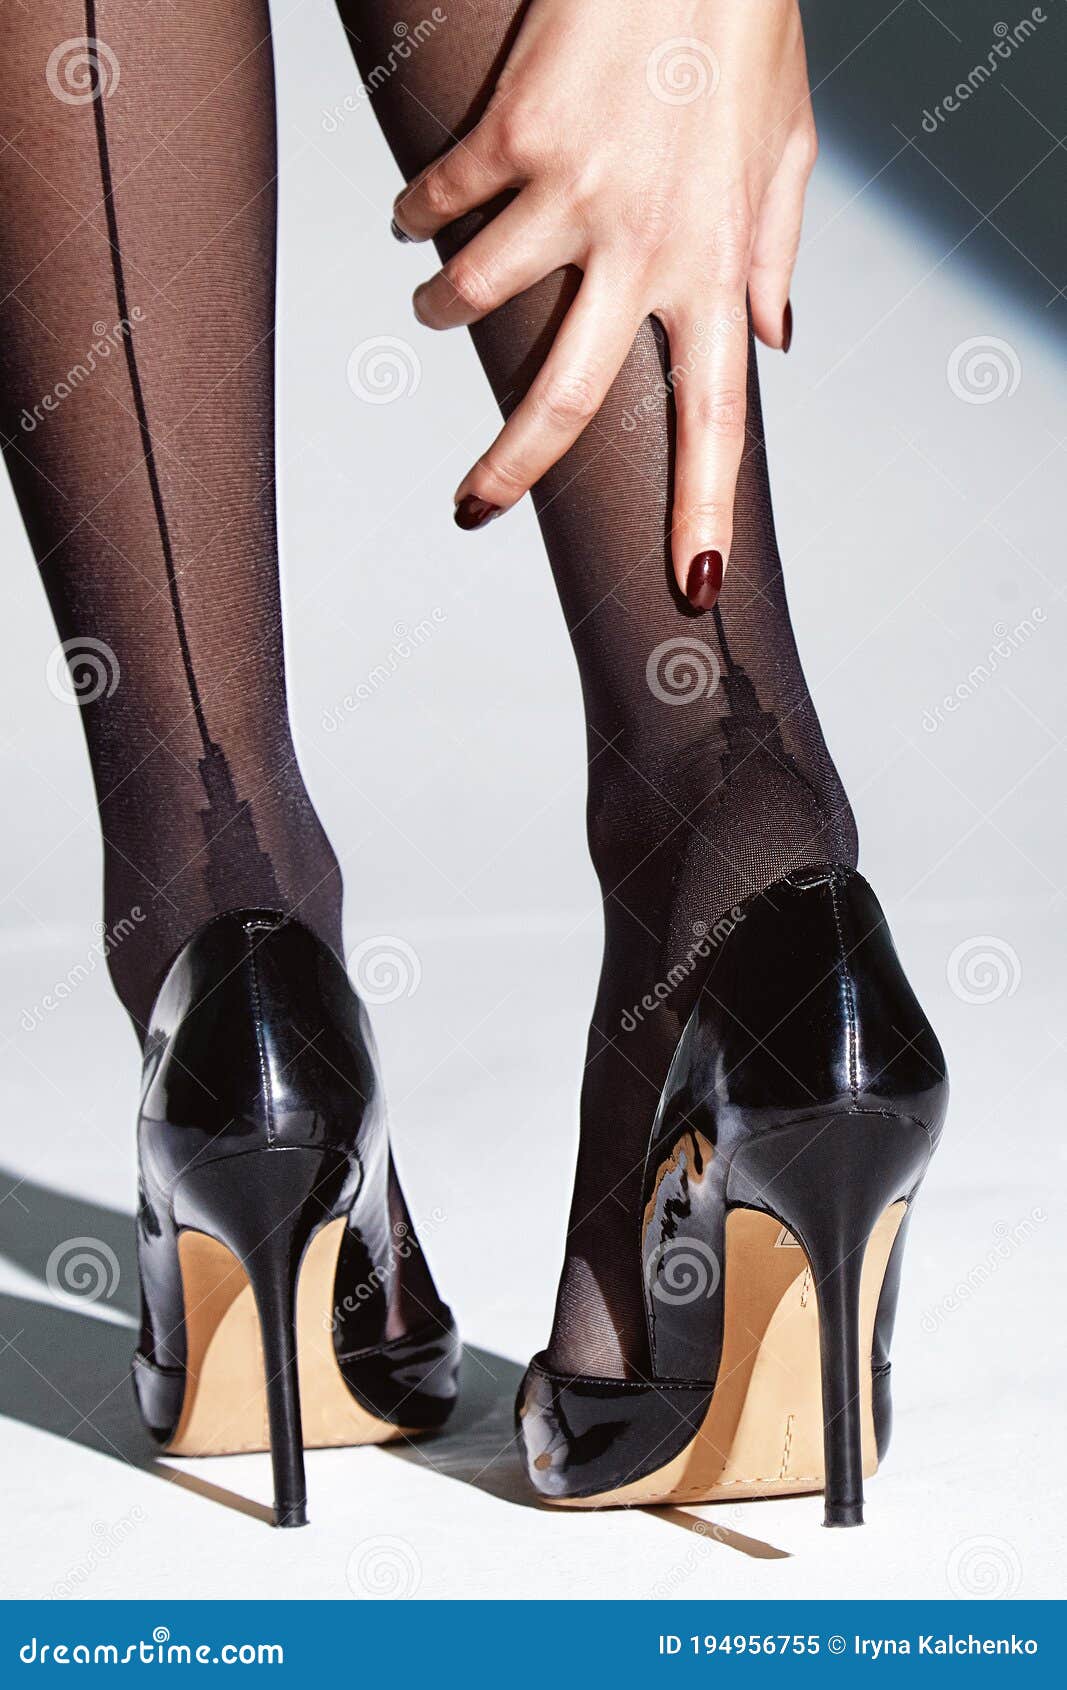 2,552 Woman Lingerie Feet Stock Photos